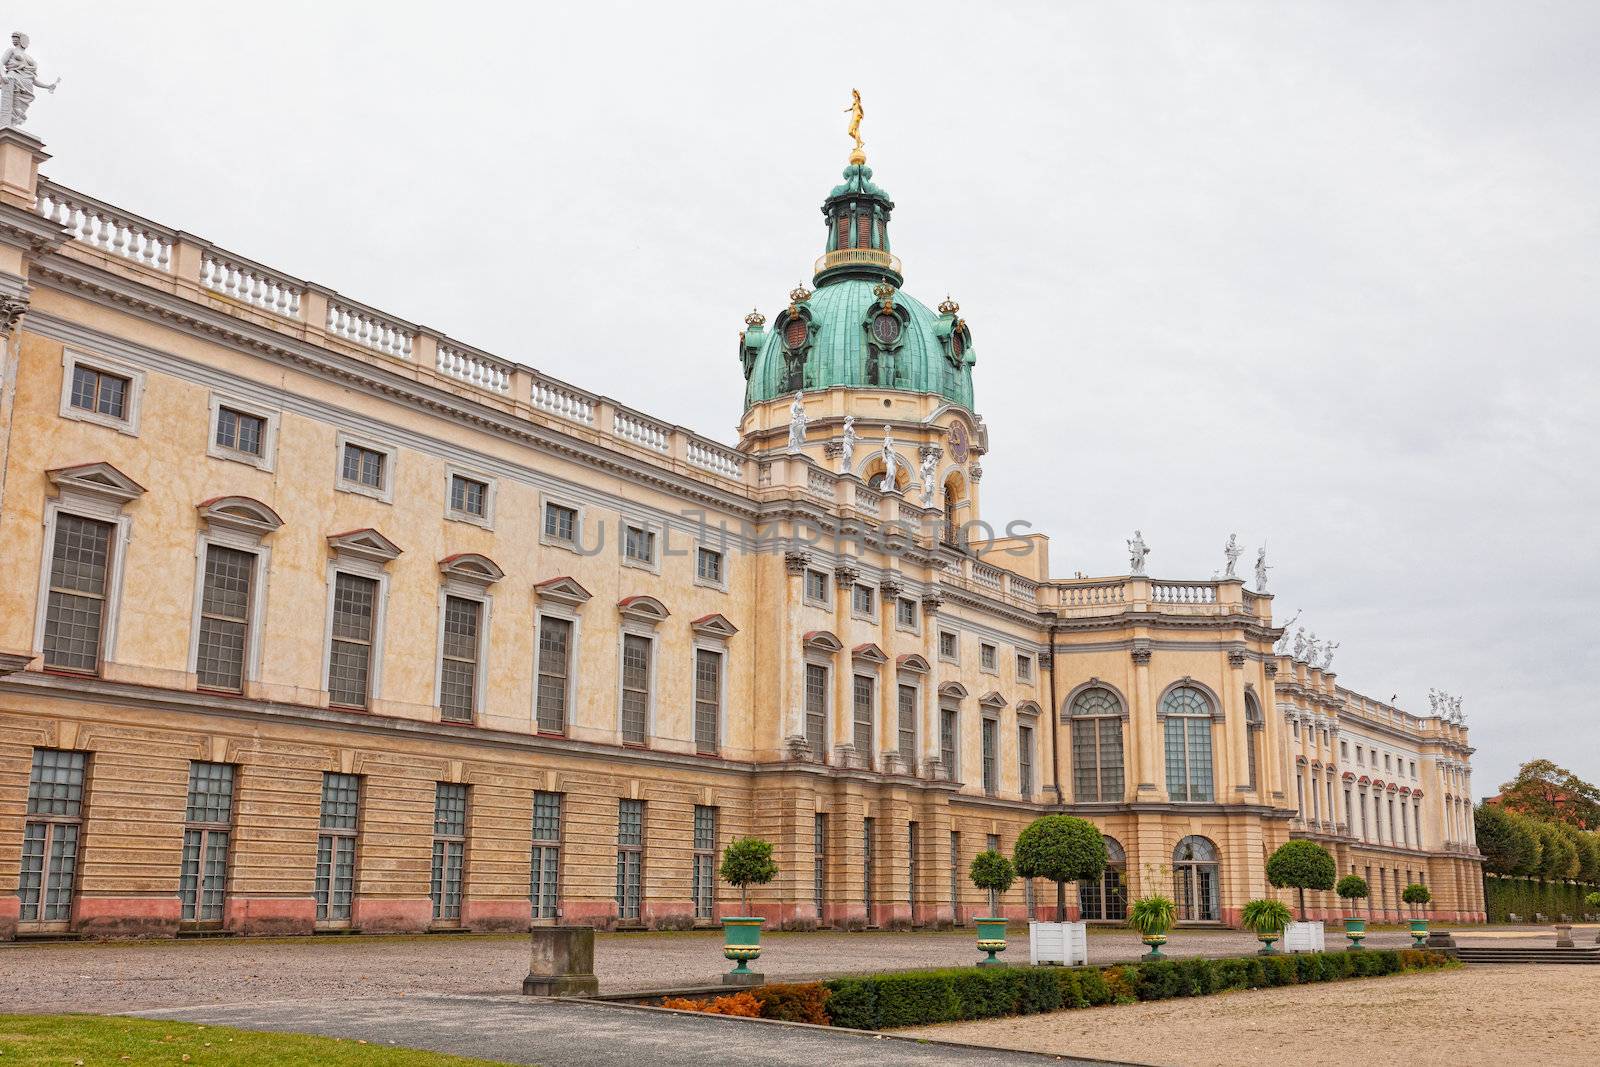 Schloss charlottenburg(char lottenburg palace) in Berlin, Germany